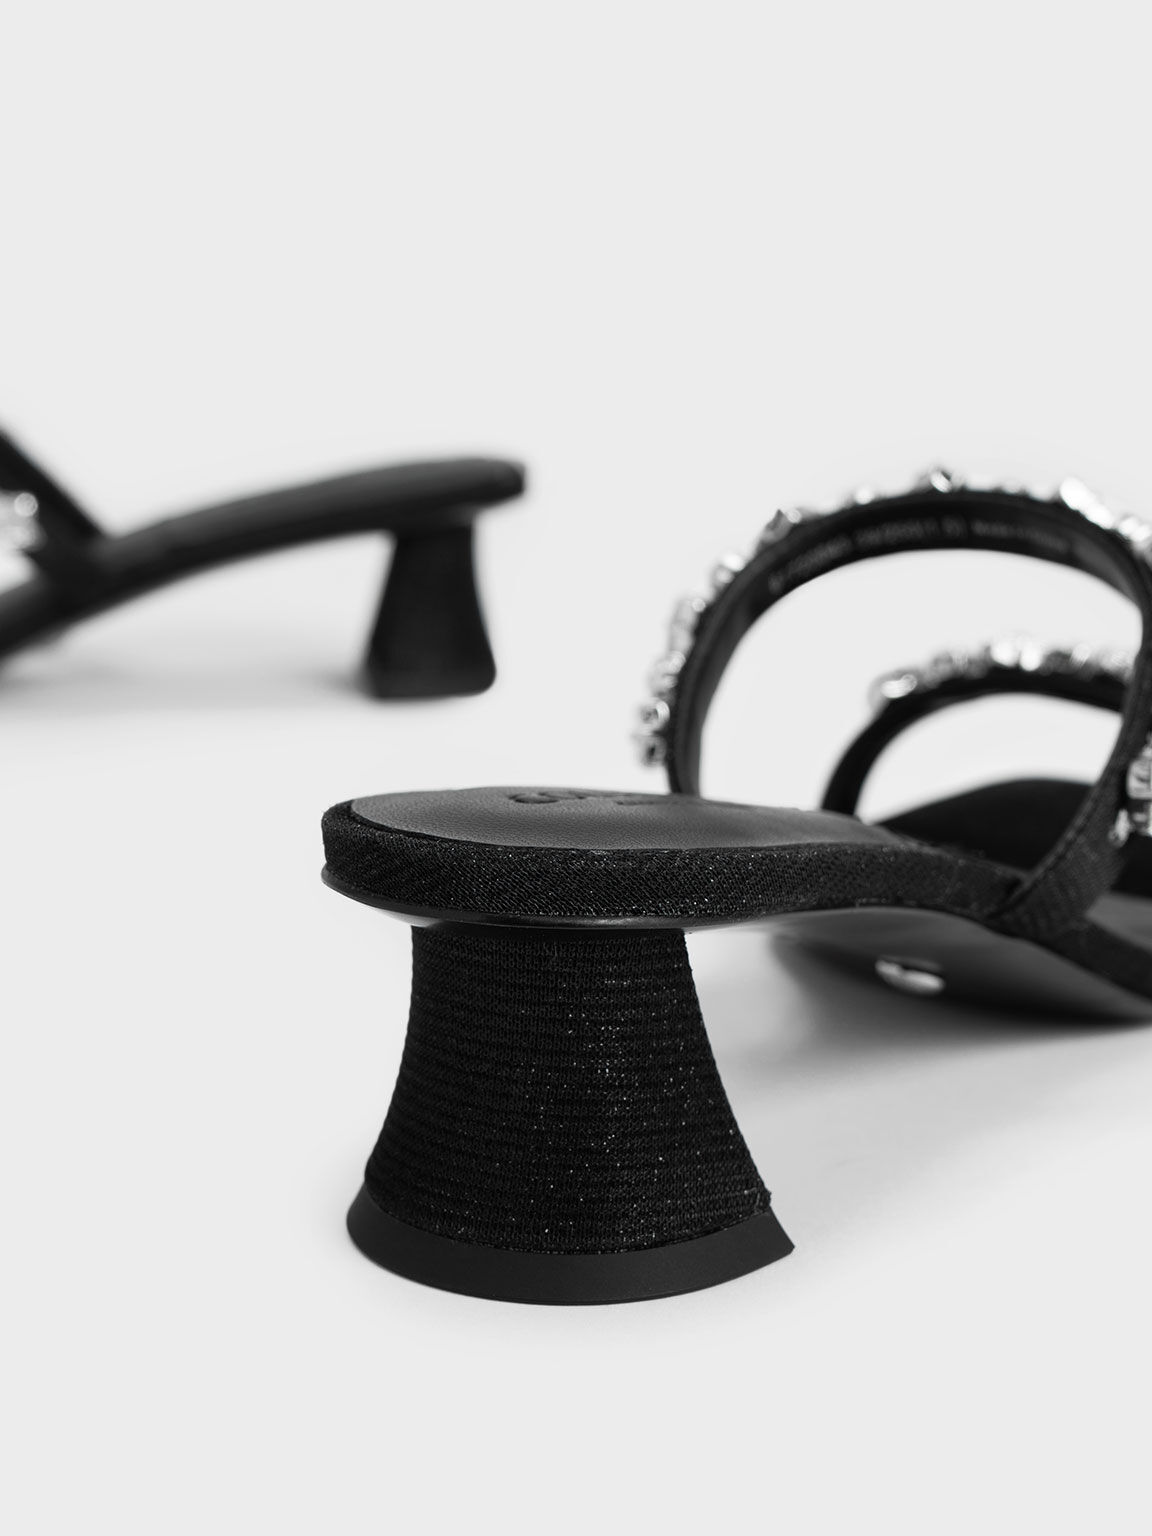 Sepatu Mules Sculptural Heel Glittered Gem-Encrusted, Black, hi-res